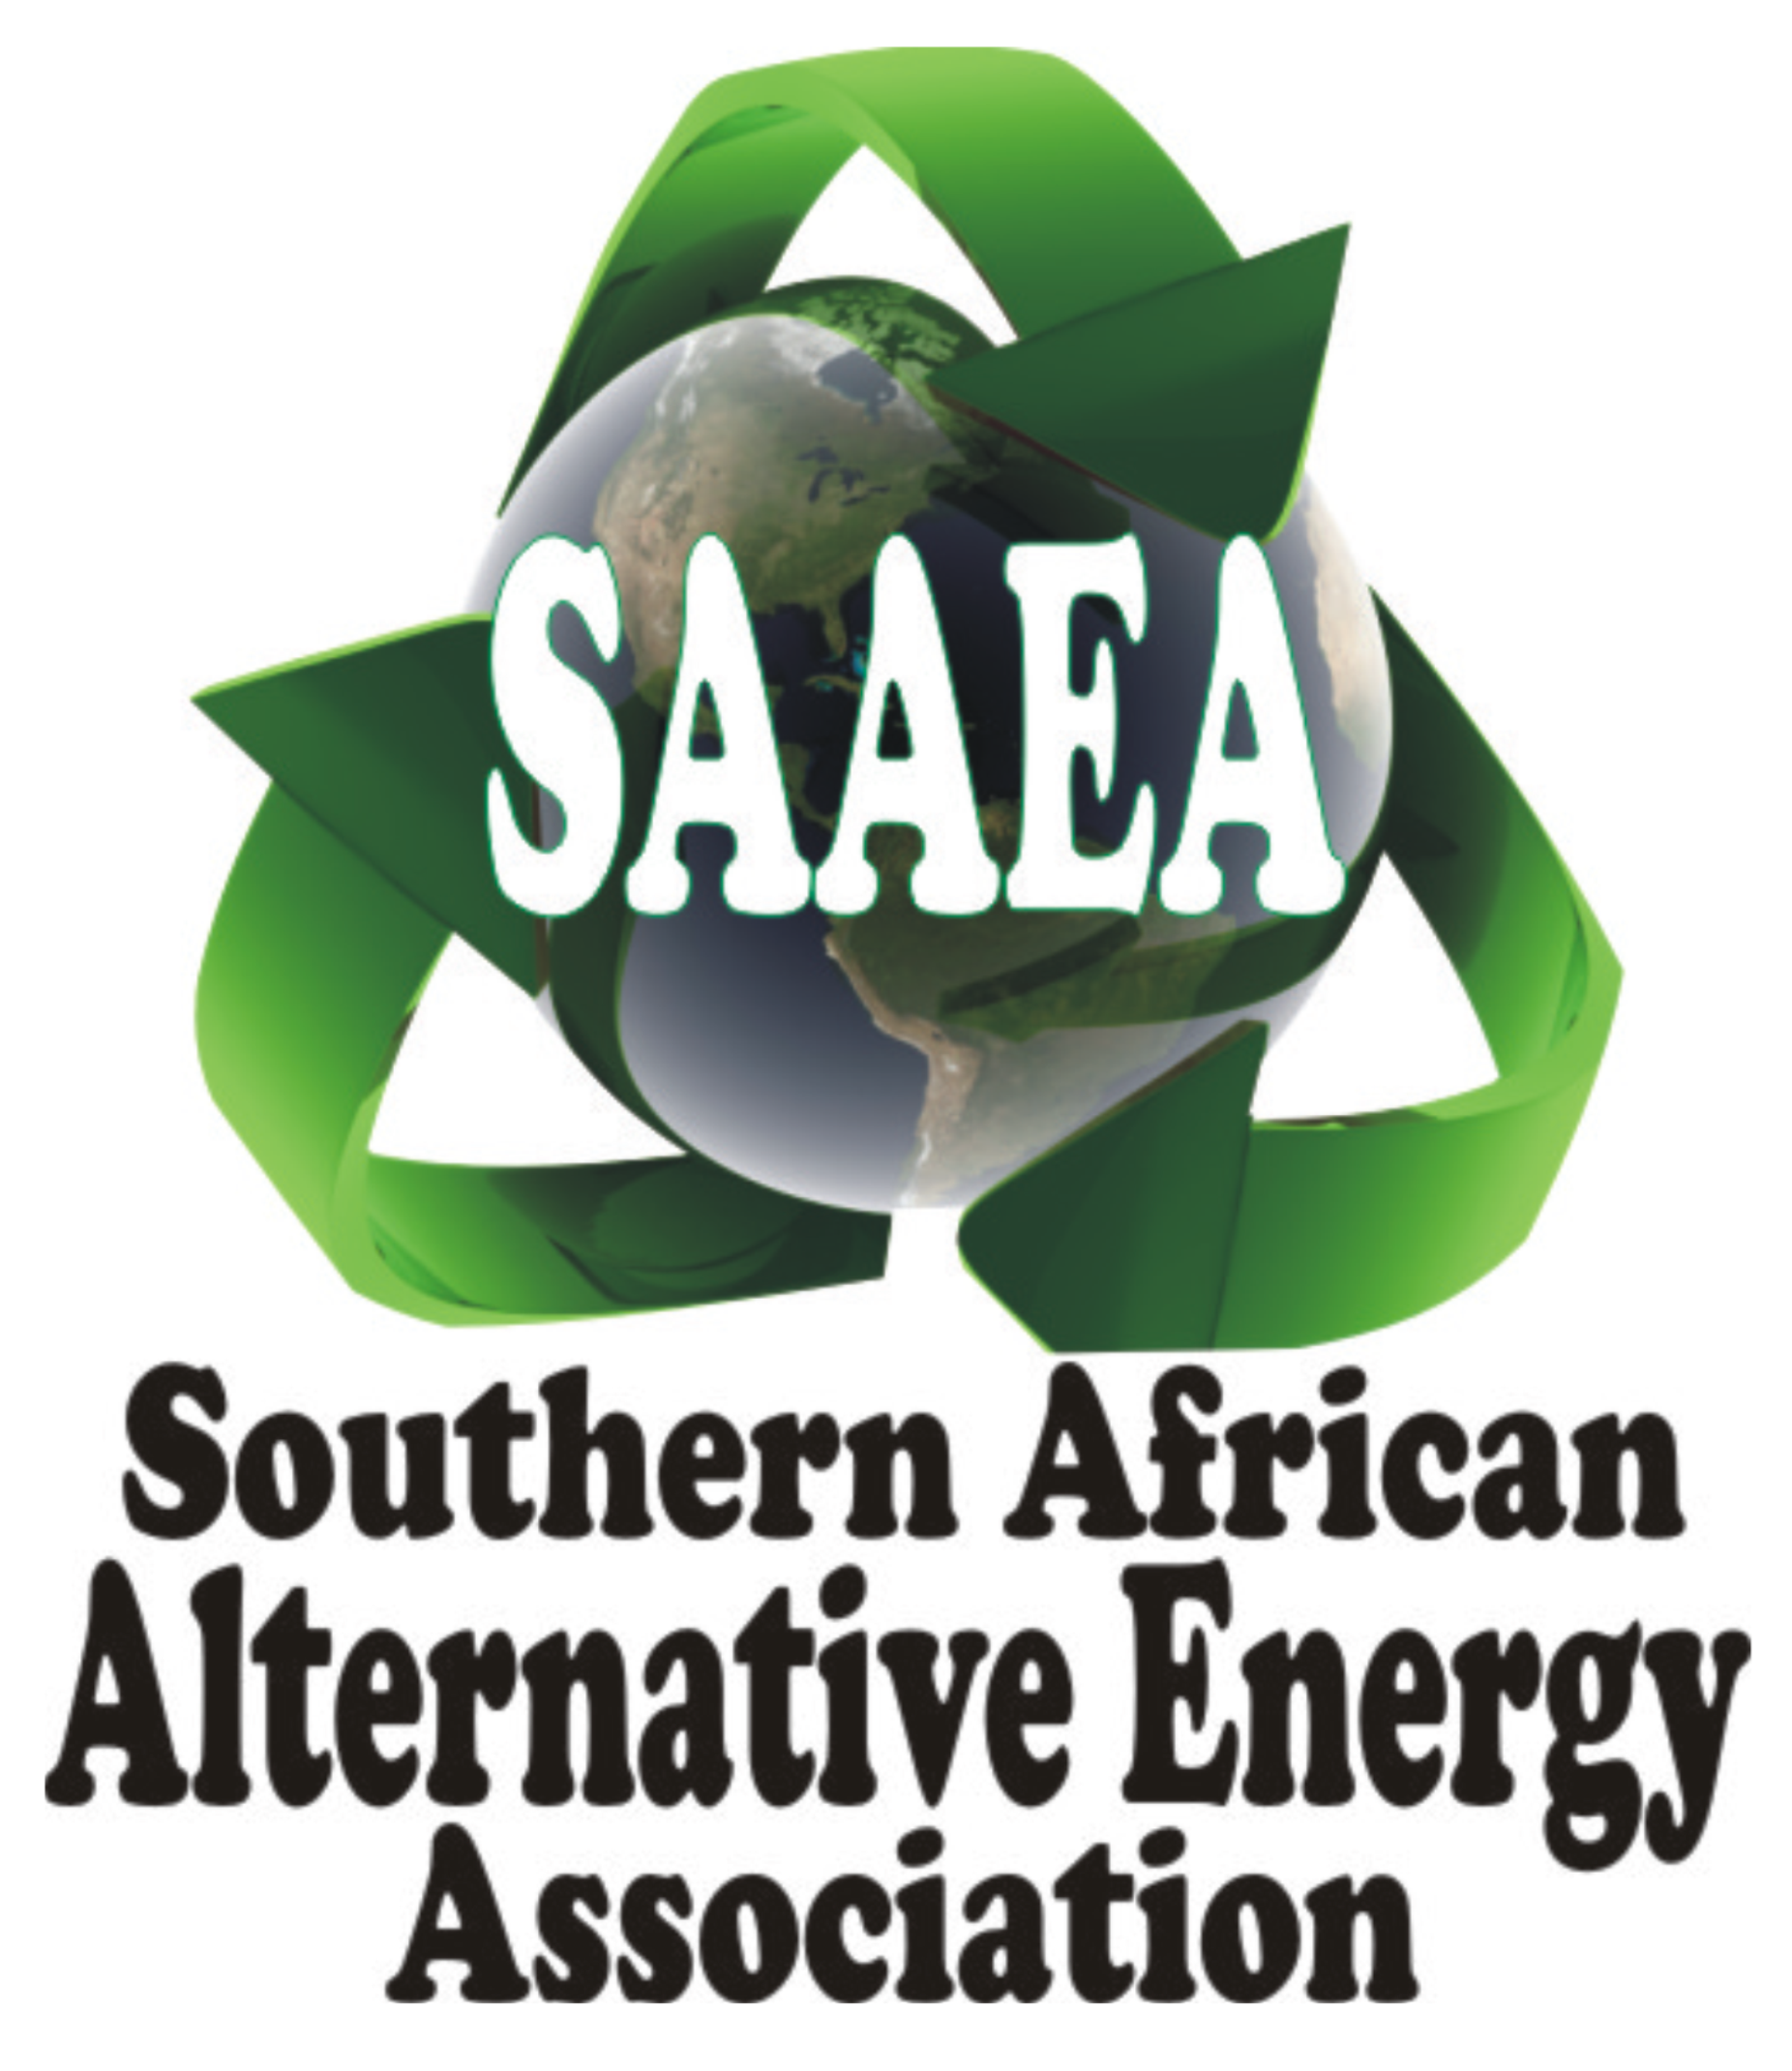 Southern African Alternative Energy Association